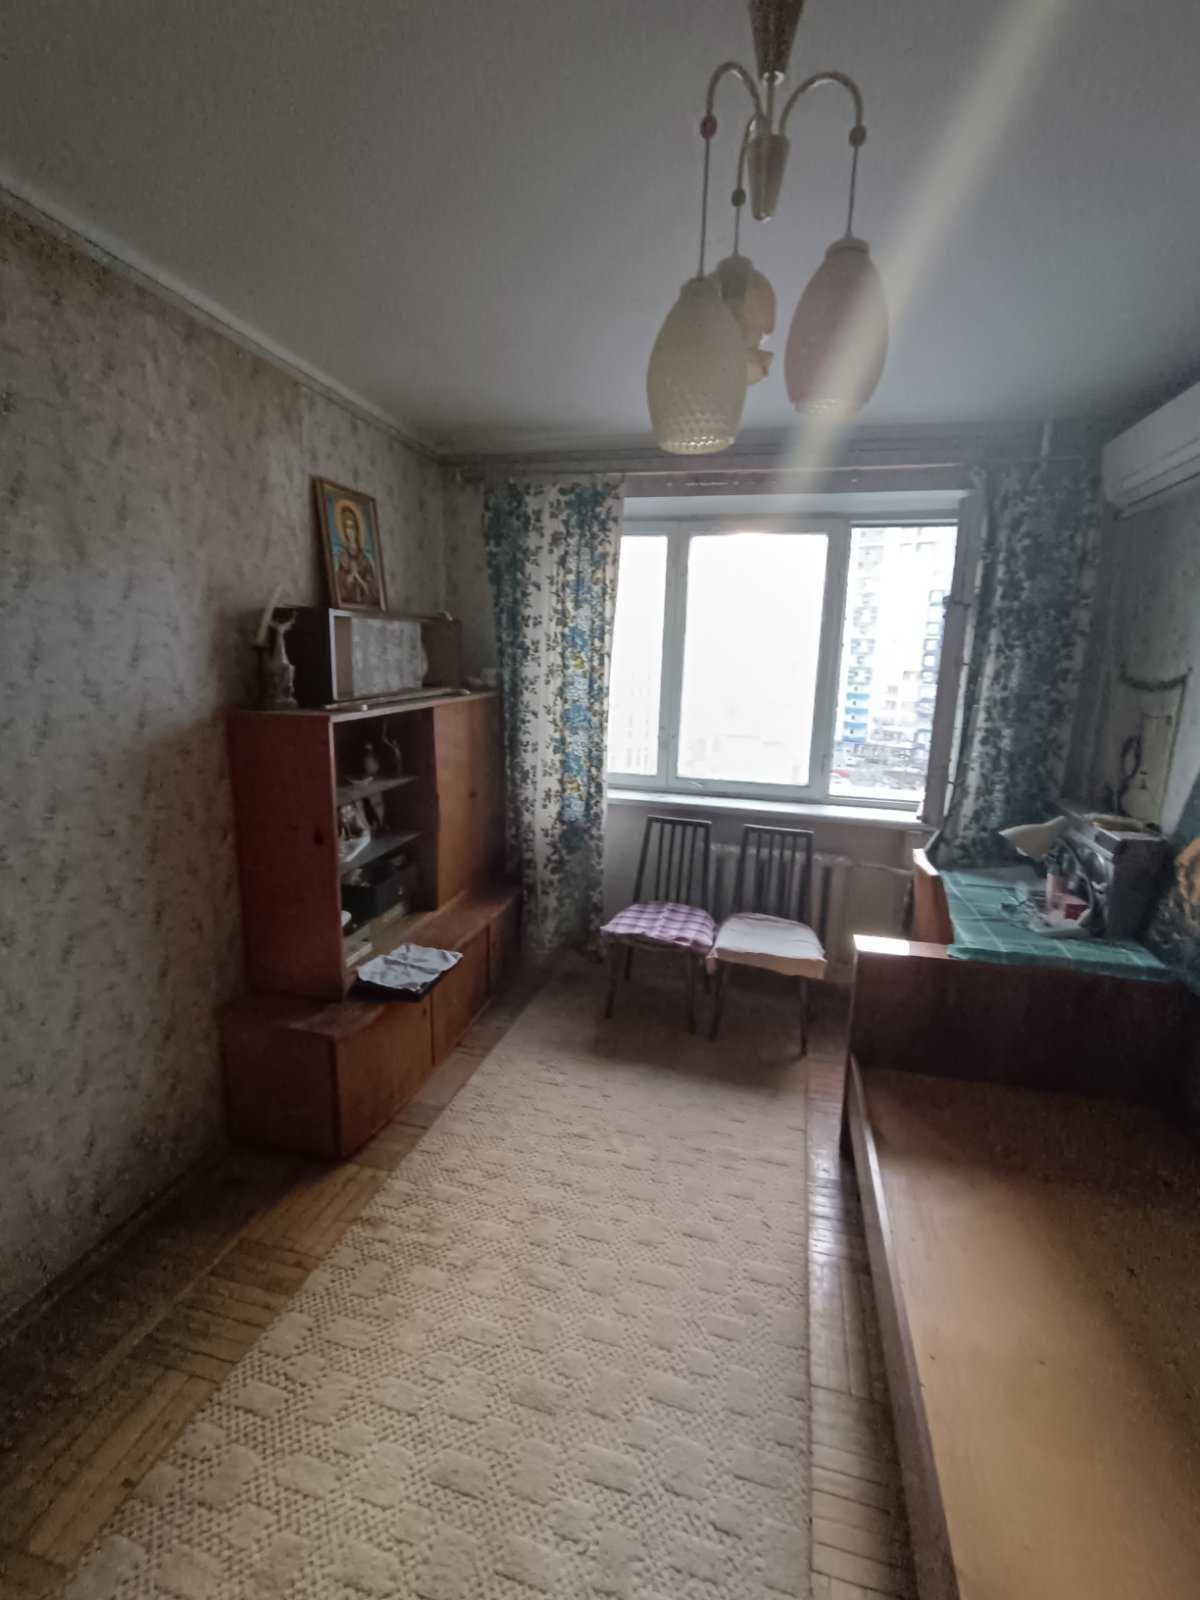 Срочная продажа 3-х комнатная квартира в районе проспекта Шевченко